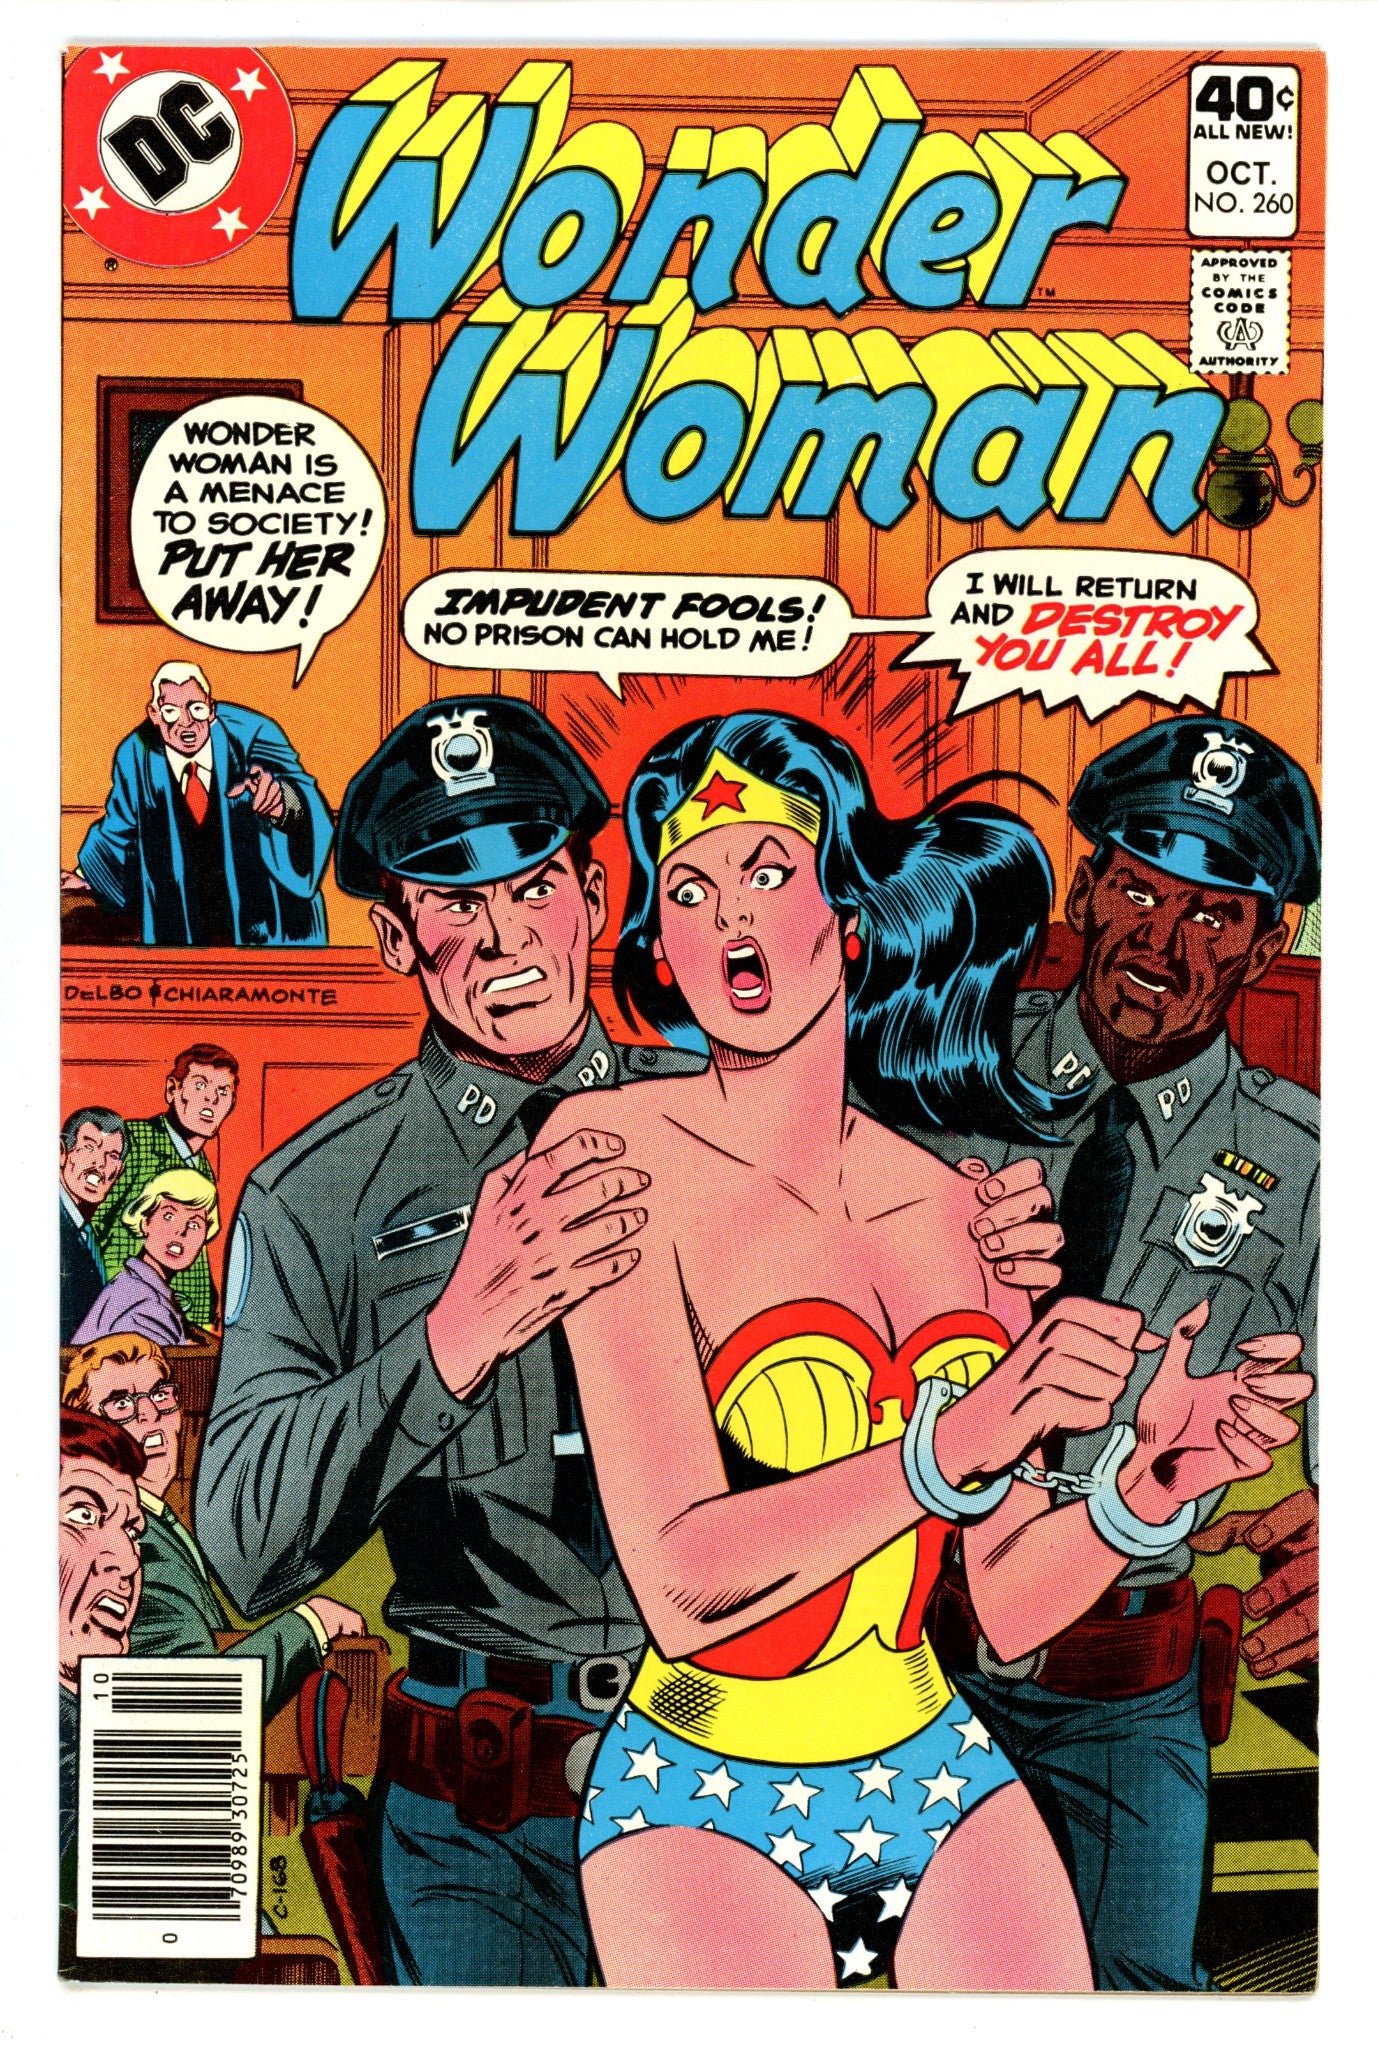 Wonder Woman Vol 1 260 FN/VF (7.0) (1979) 